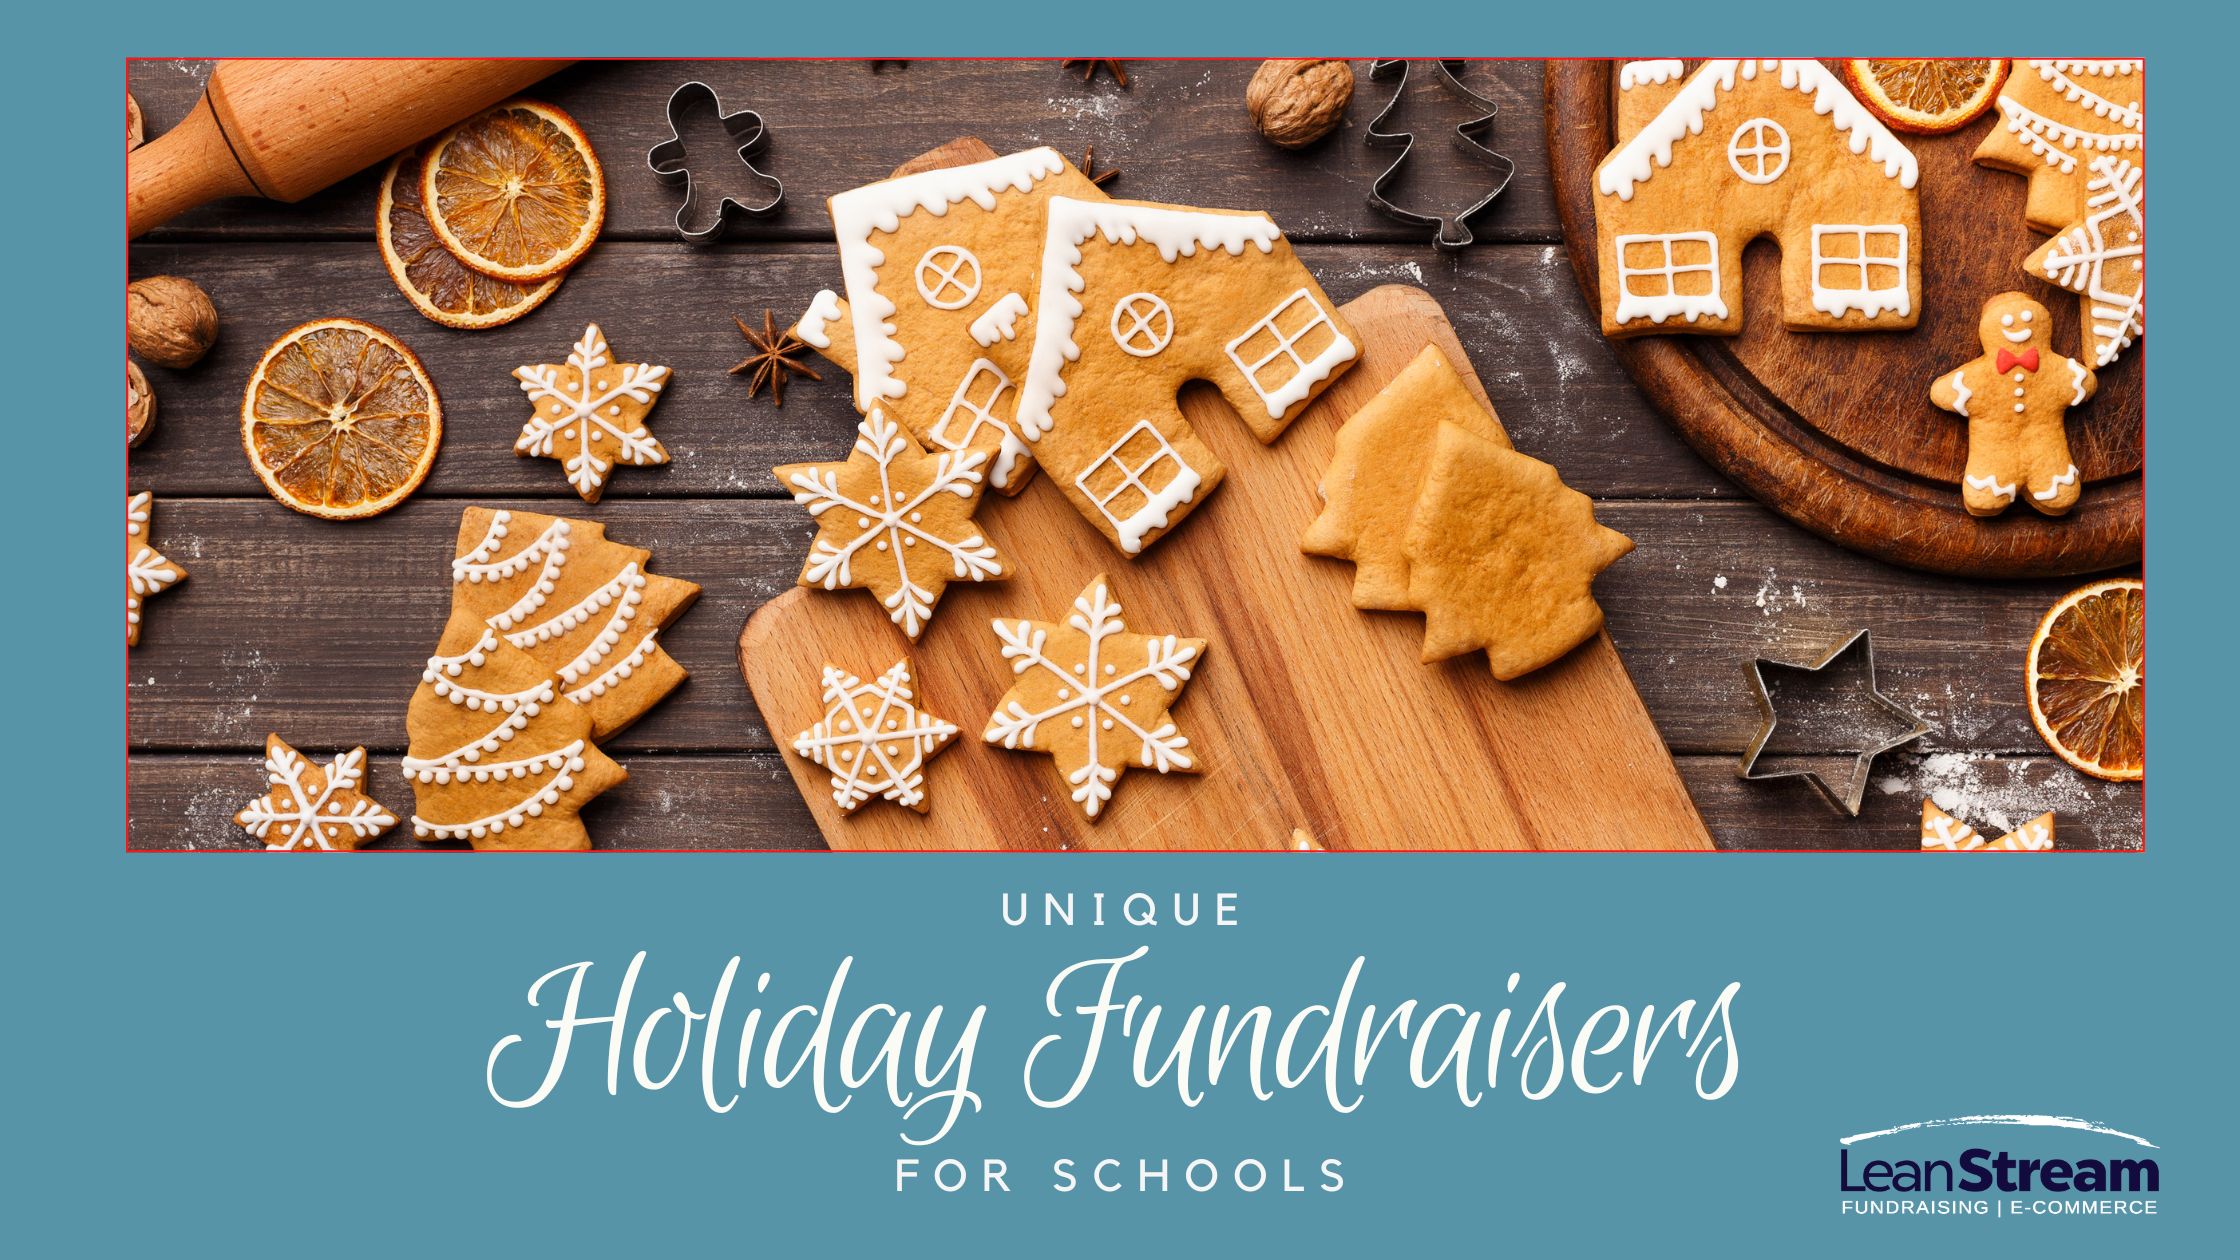 Unique Holiday Fundraising Ideas for Schools